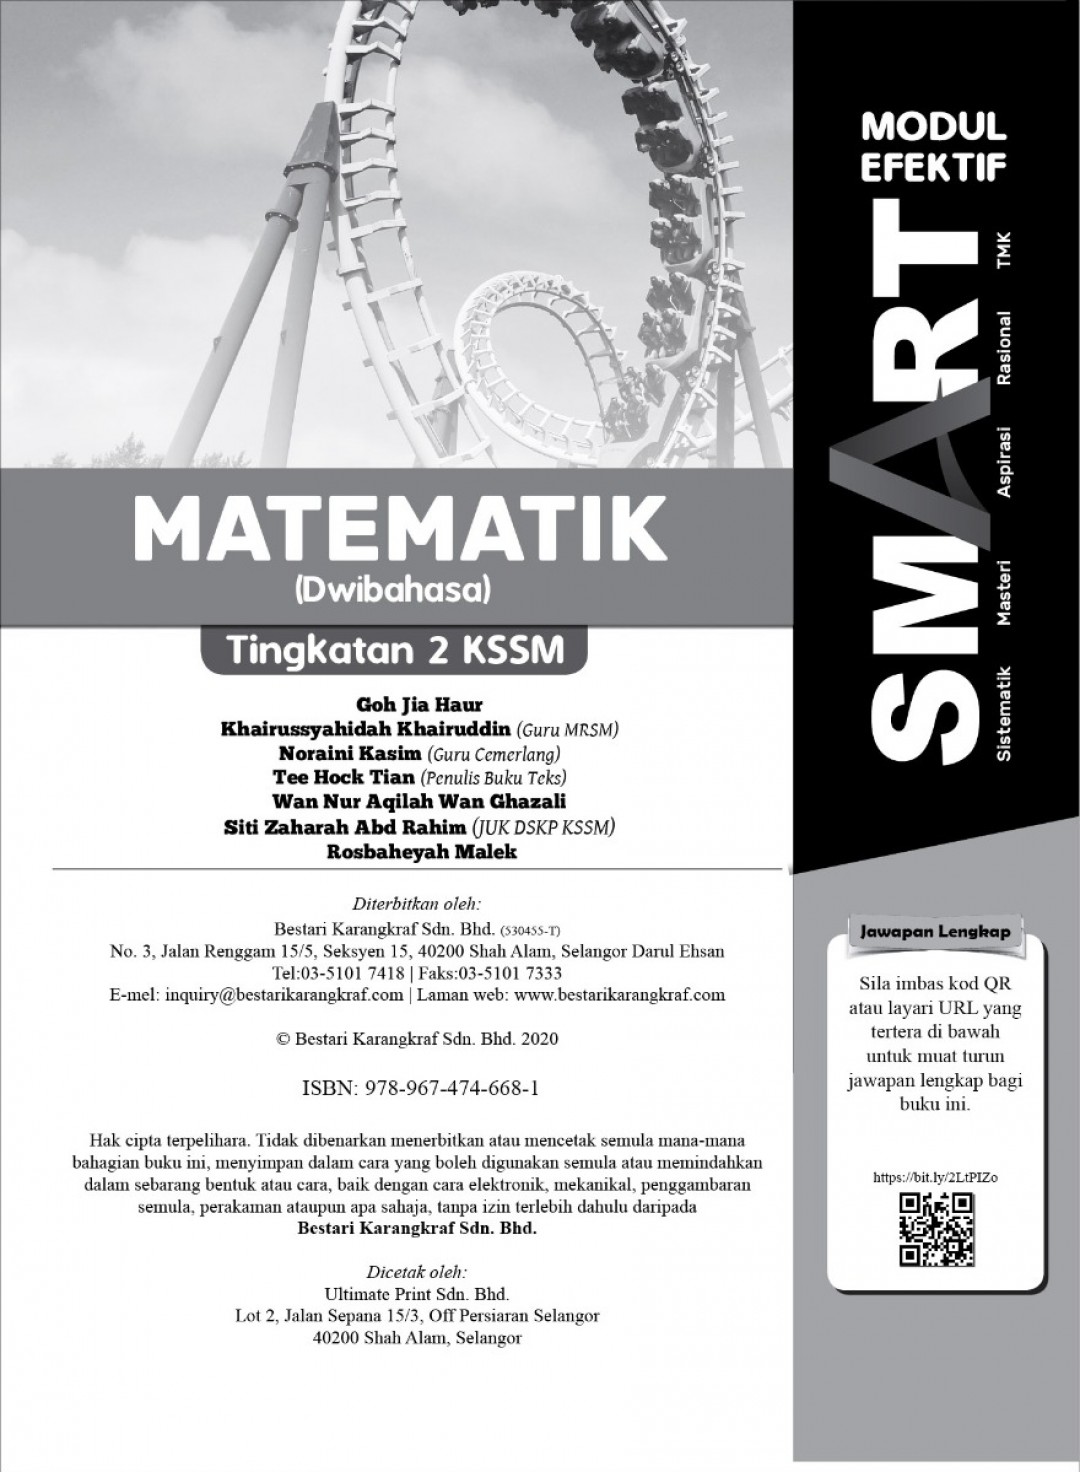 Modul Efektif SMART Matematik Tingkatan 2 (2020)